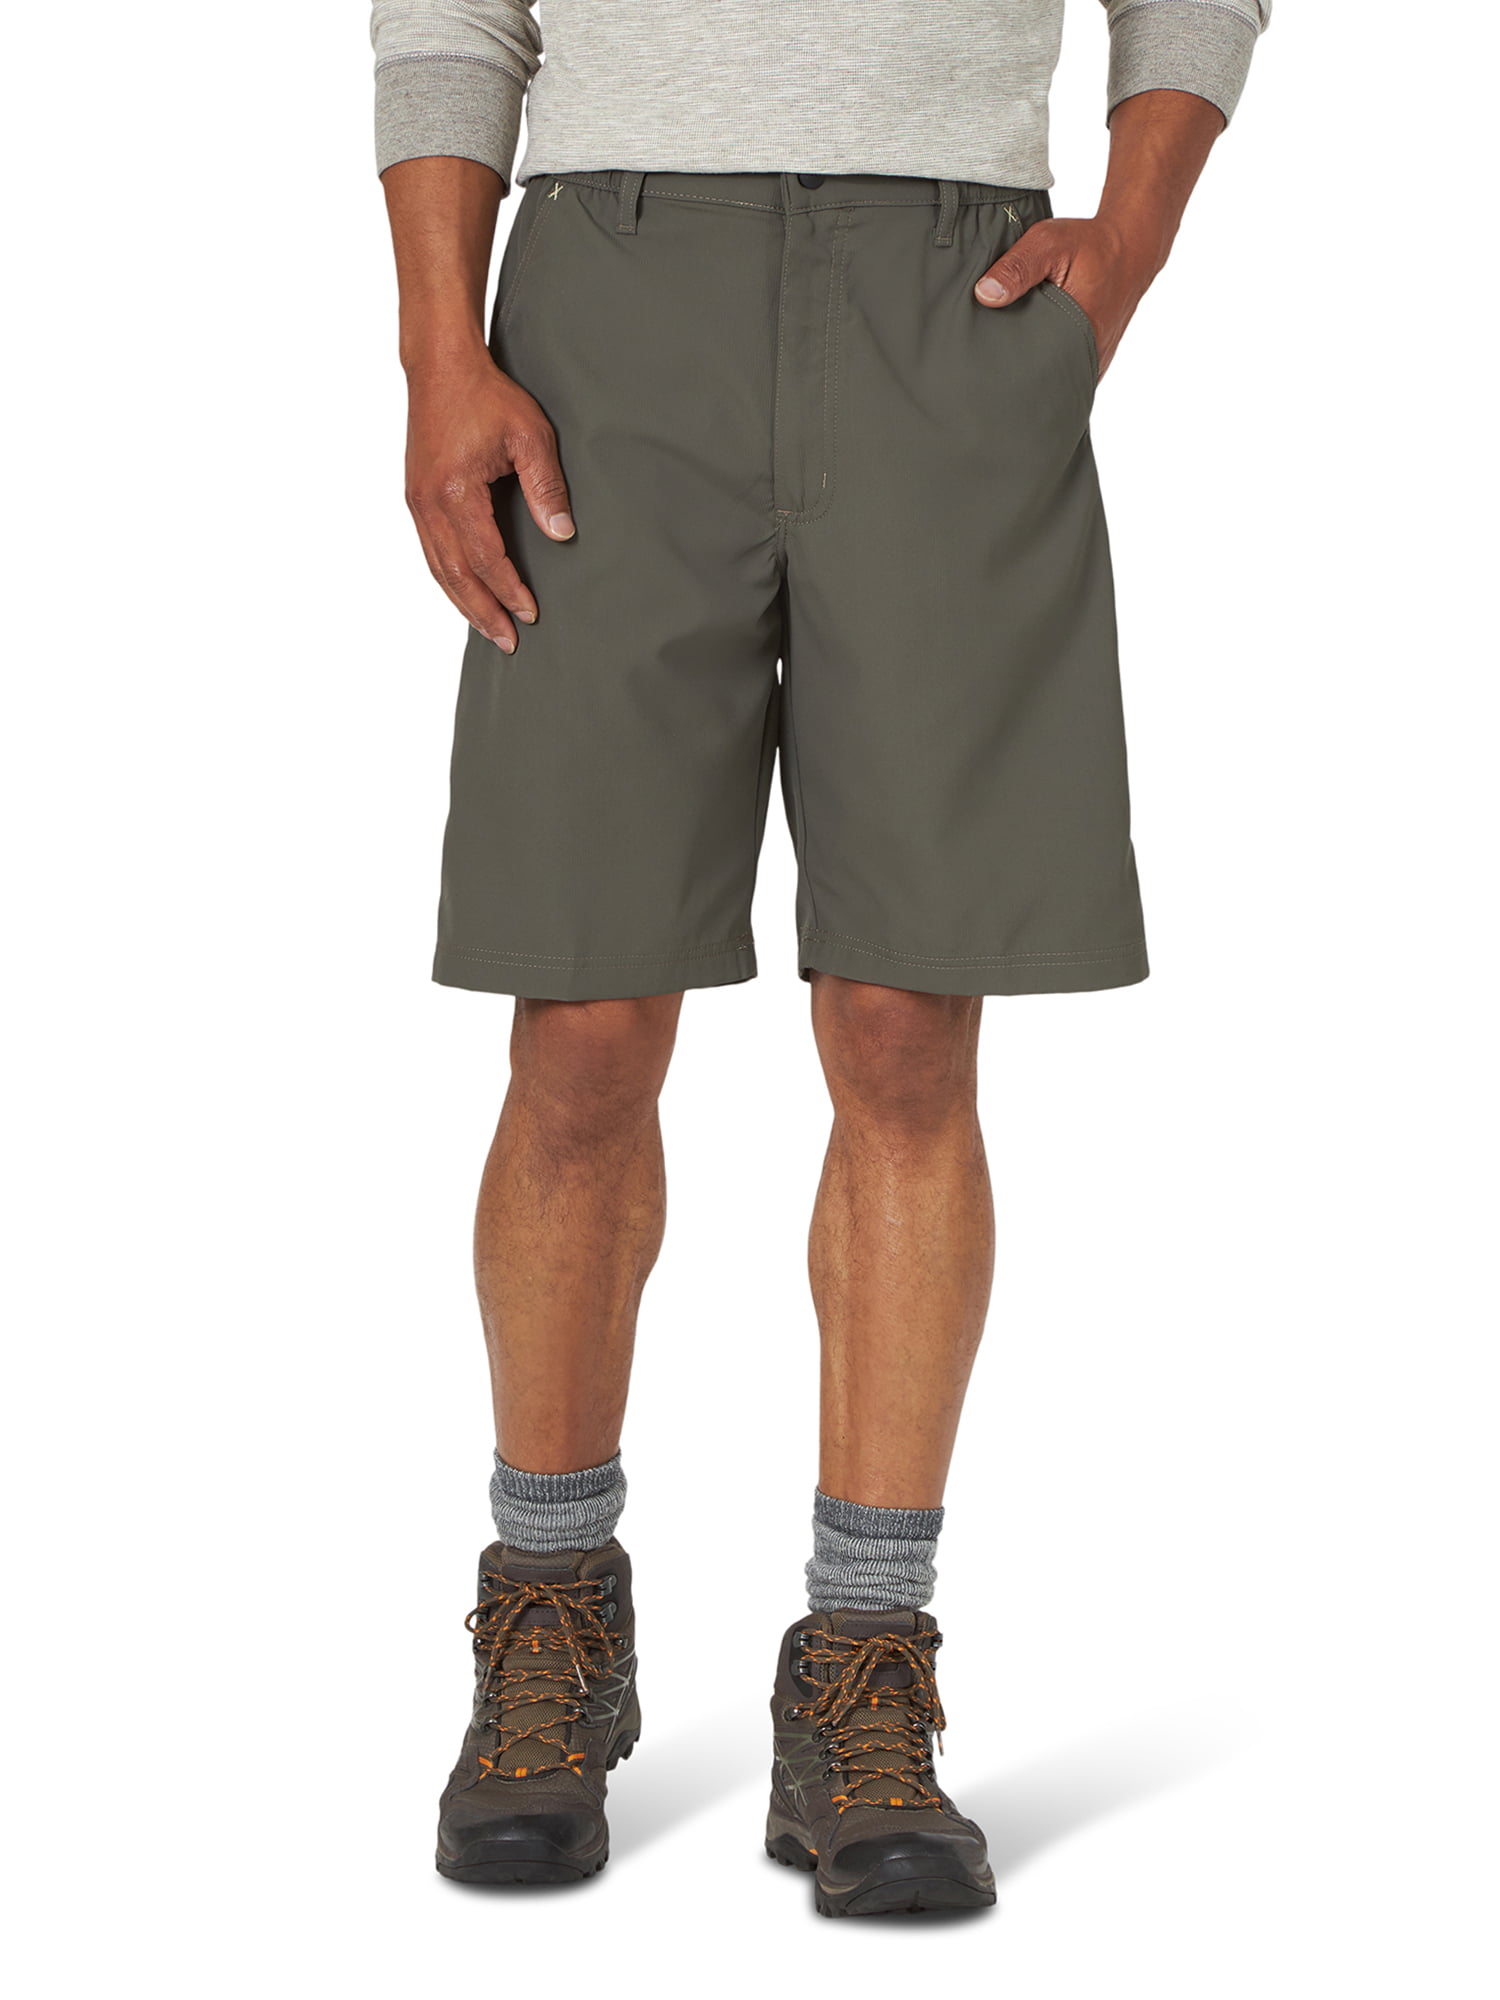 wrangler carpenter shorts walmart